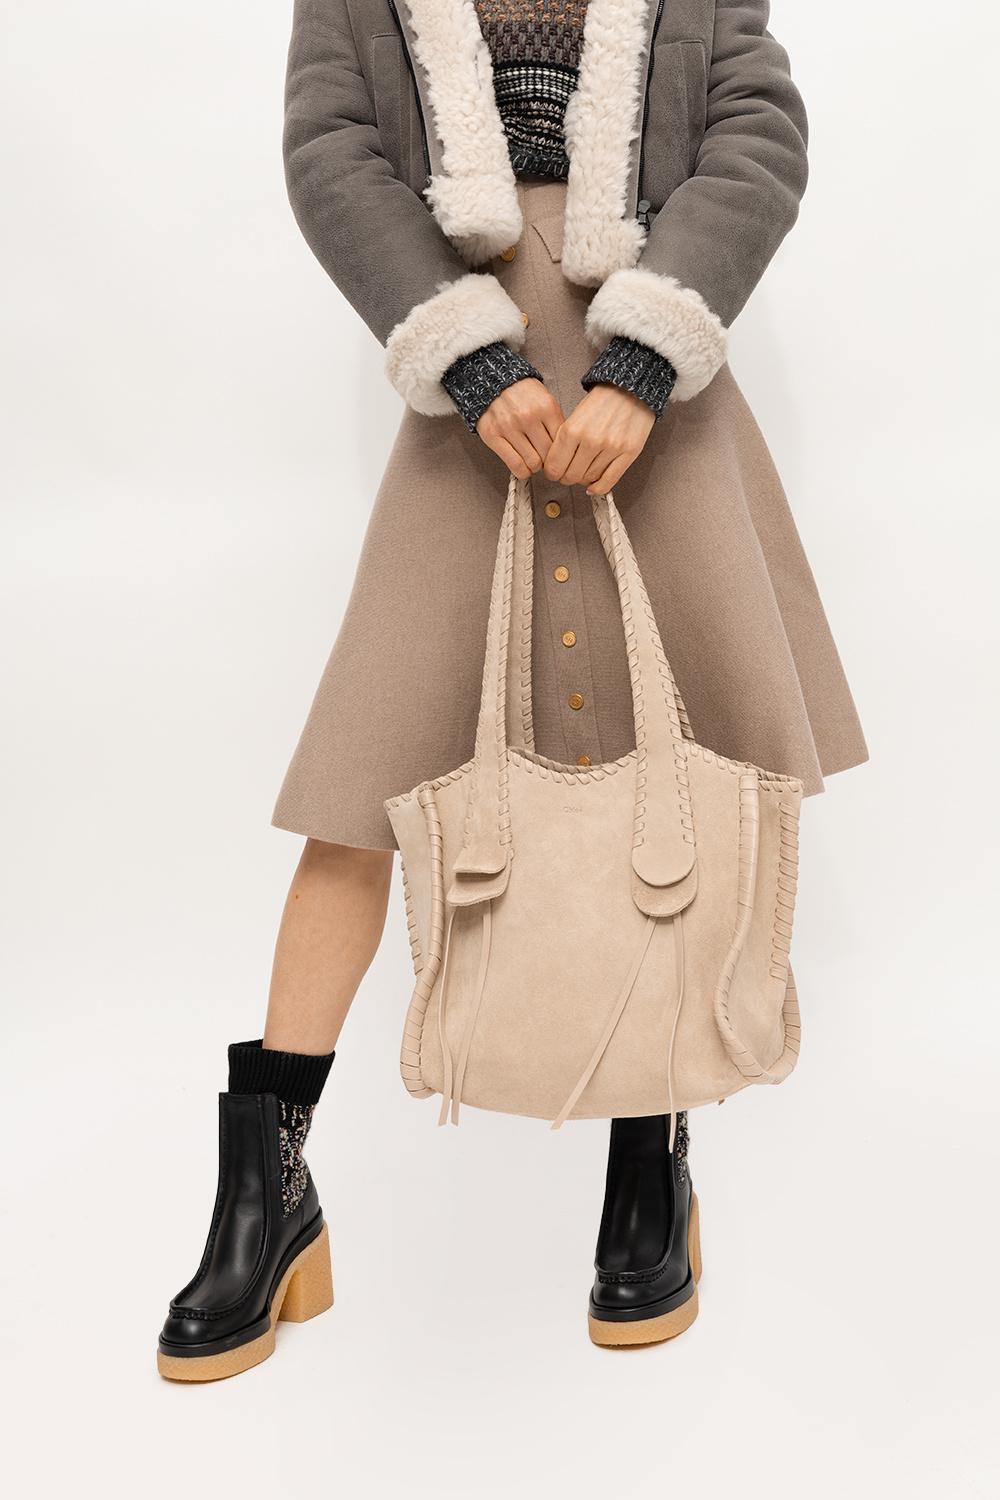 Chloé 'mony Medium' Suede Shopper Bag in Natural | Lyst